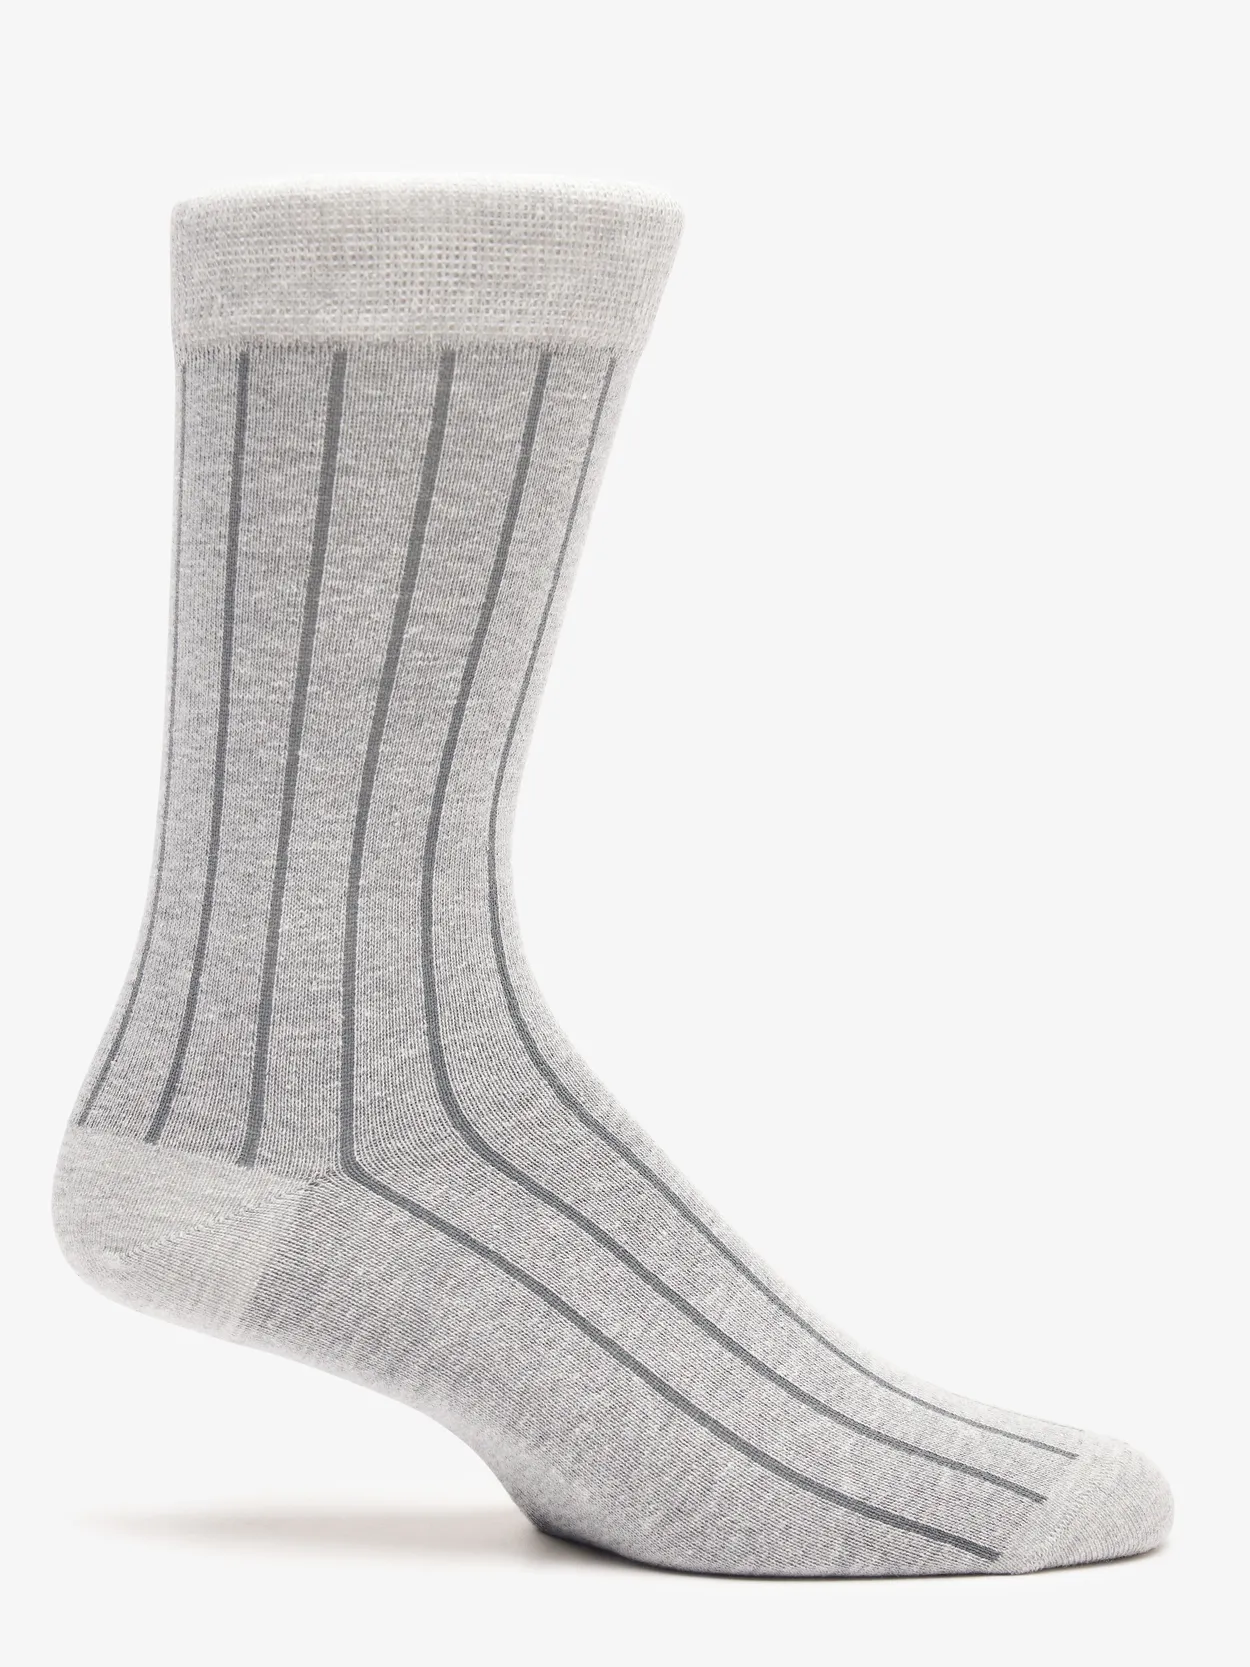 Grey & Blue Socks Bowery